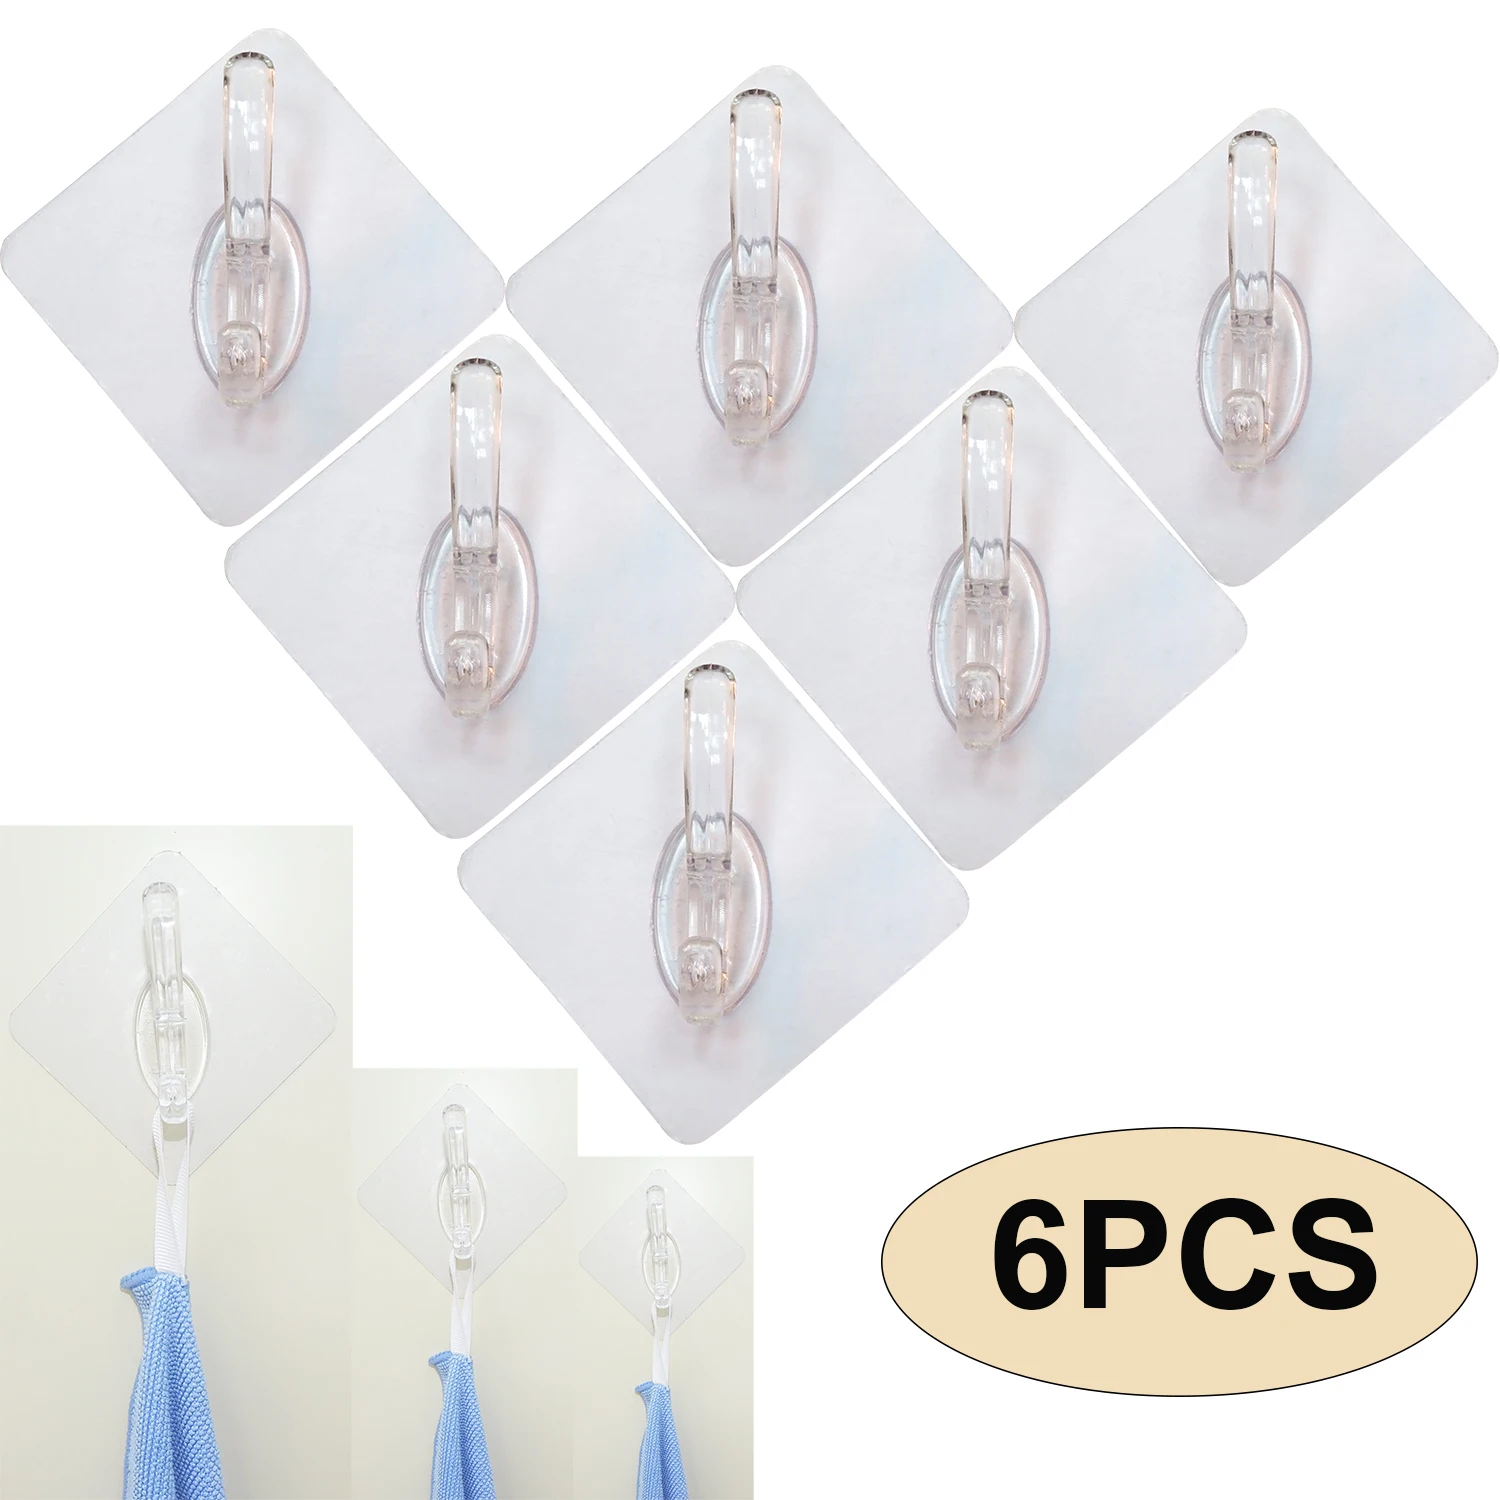 

6PCS Transparent Strong Self Adhesive Door Wall Hangers Racks Hooks Suction Heavy Load Rack Cup Sucker for Kitchen Bathroom